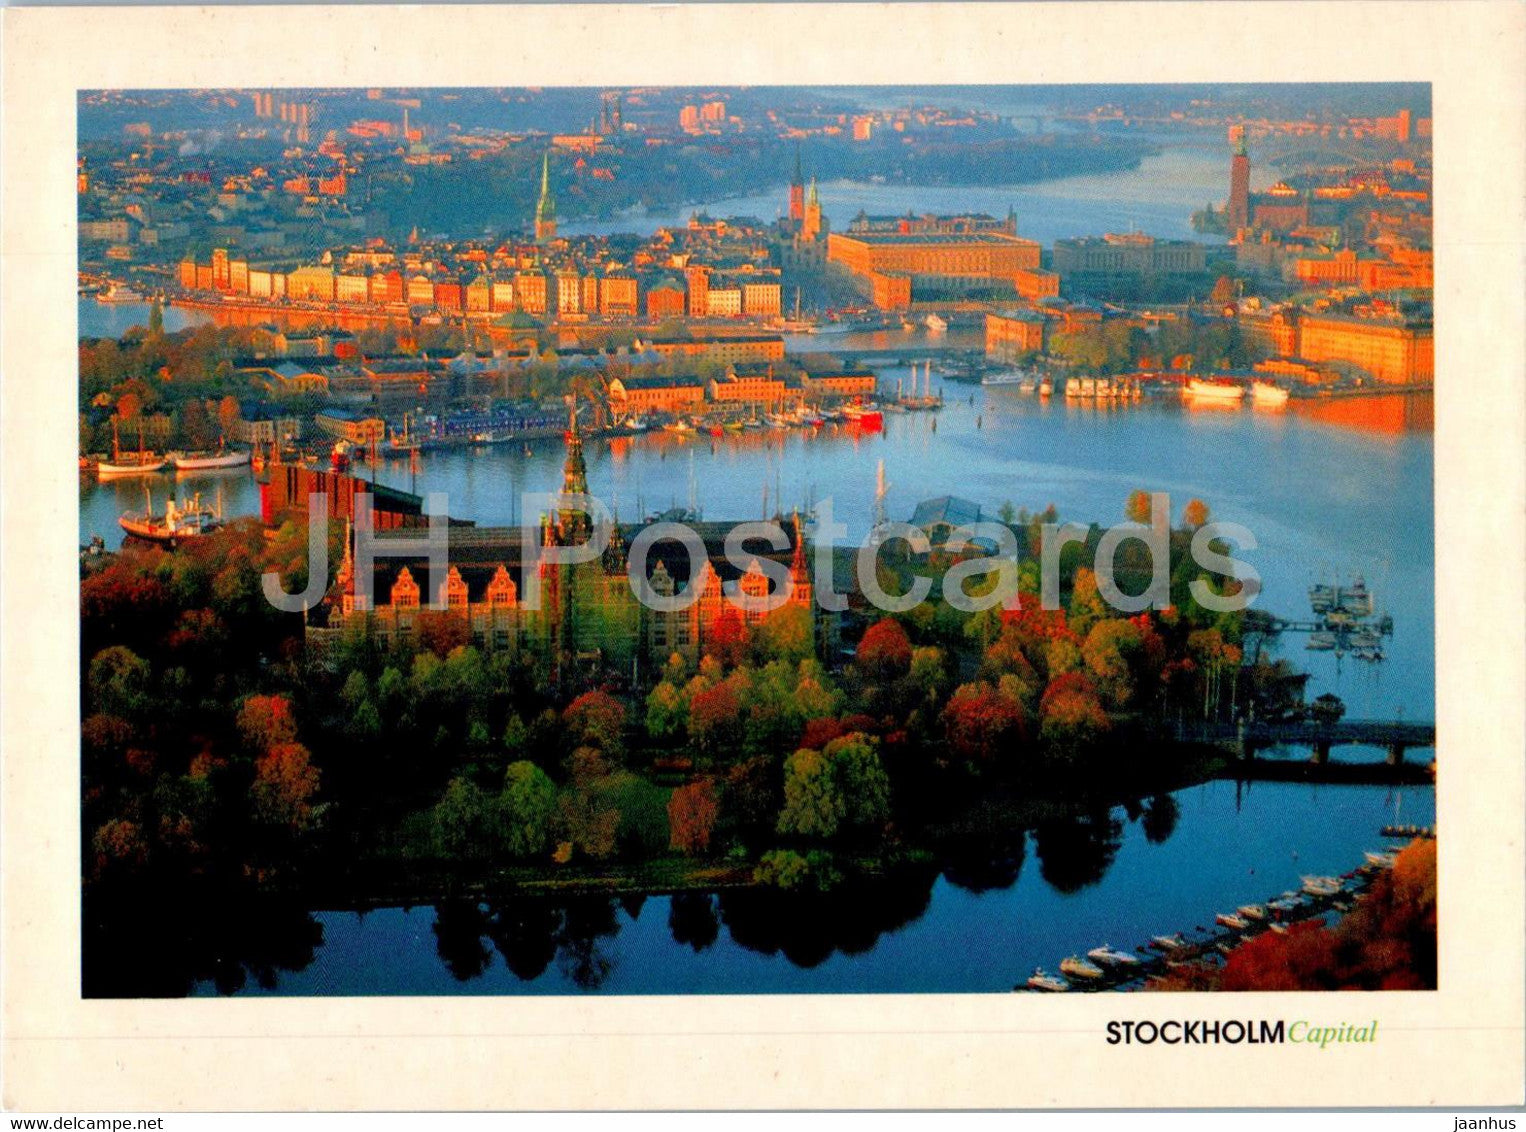 Stockholm Capital - Gryning over Stockholm - dawn - Sweden - unused - JH Postcards